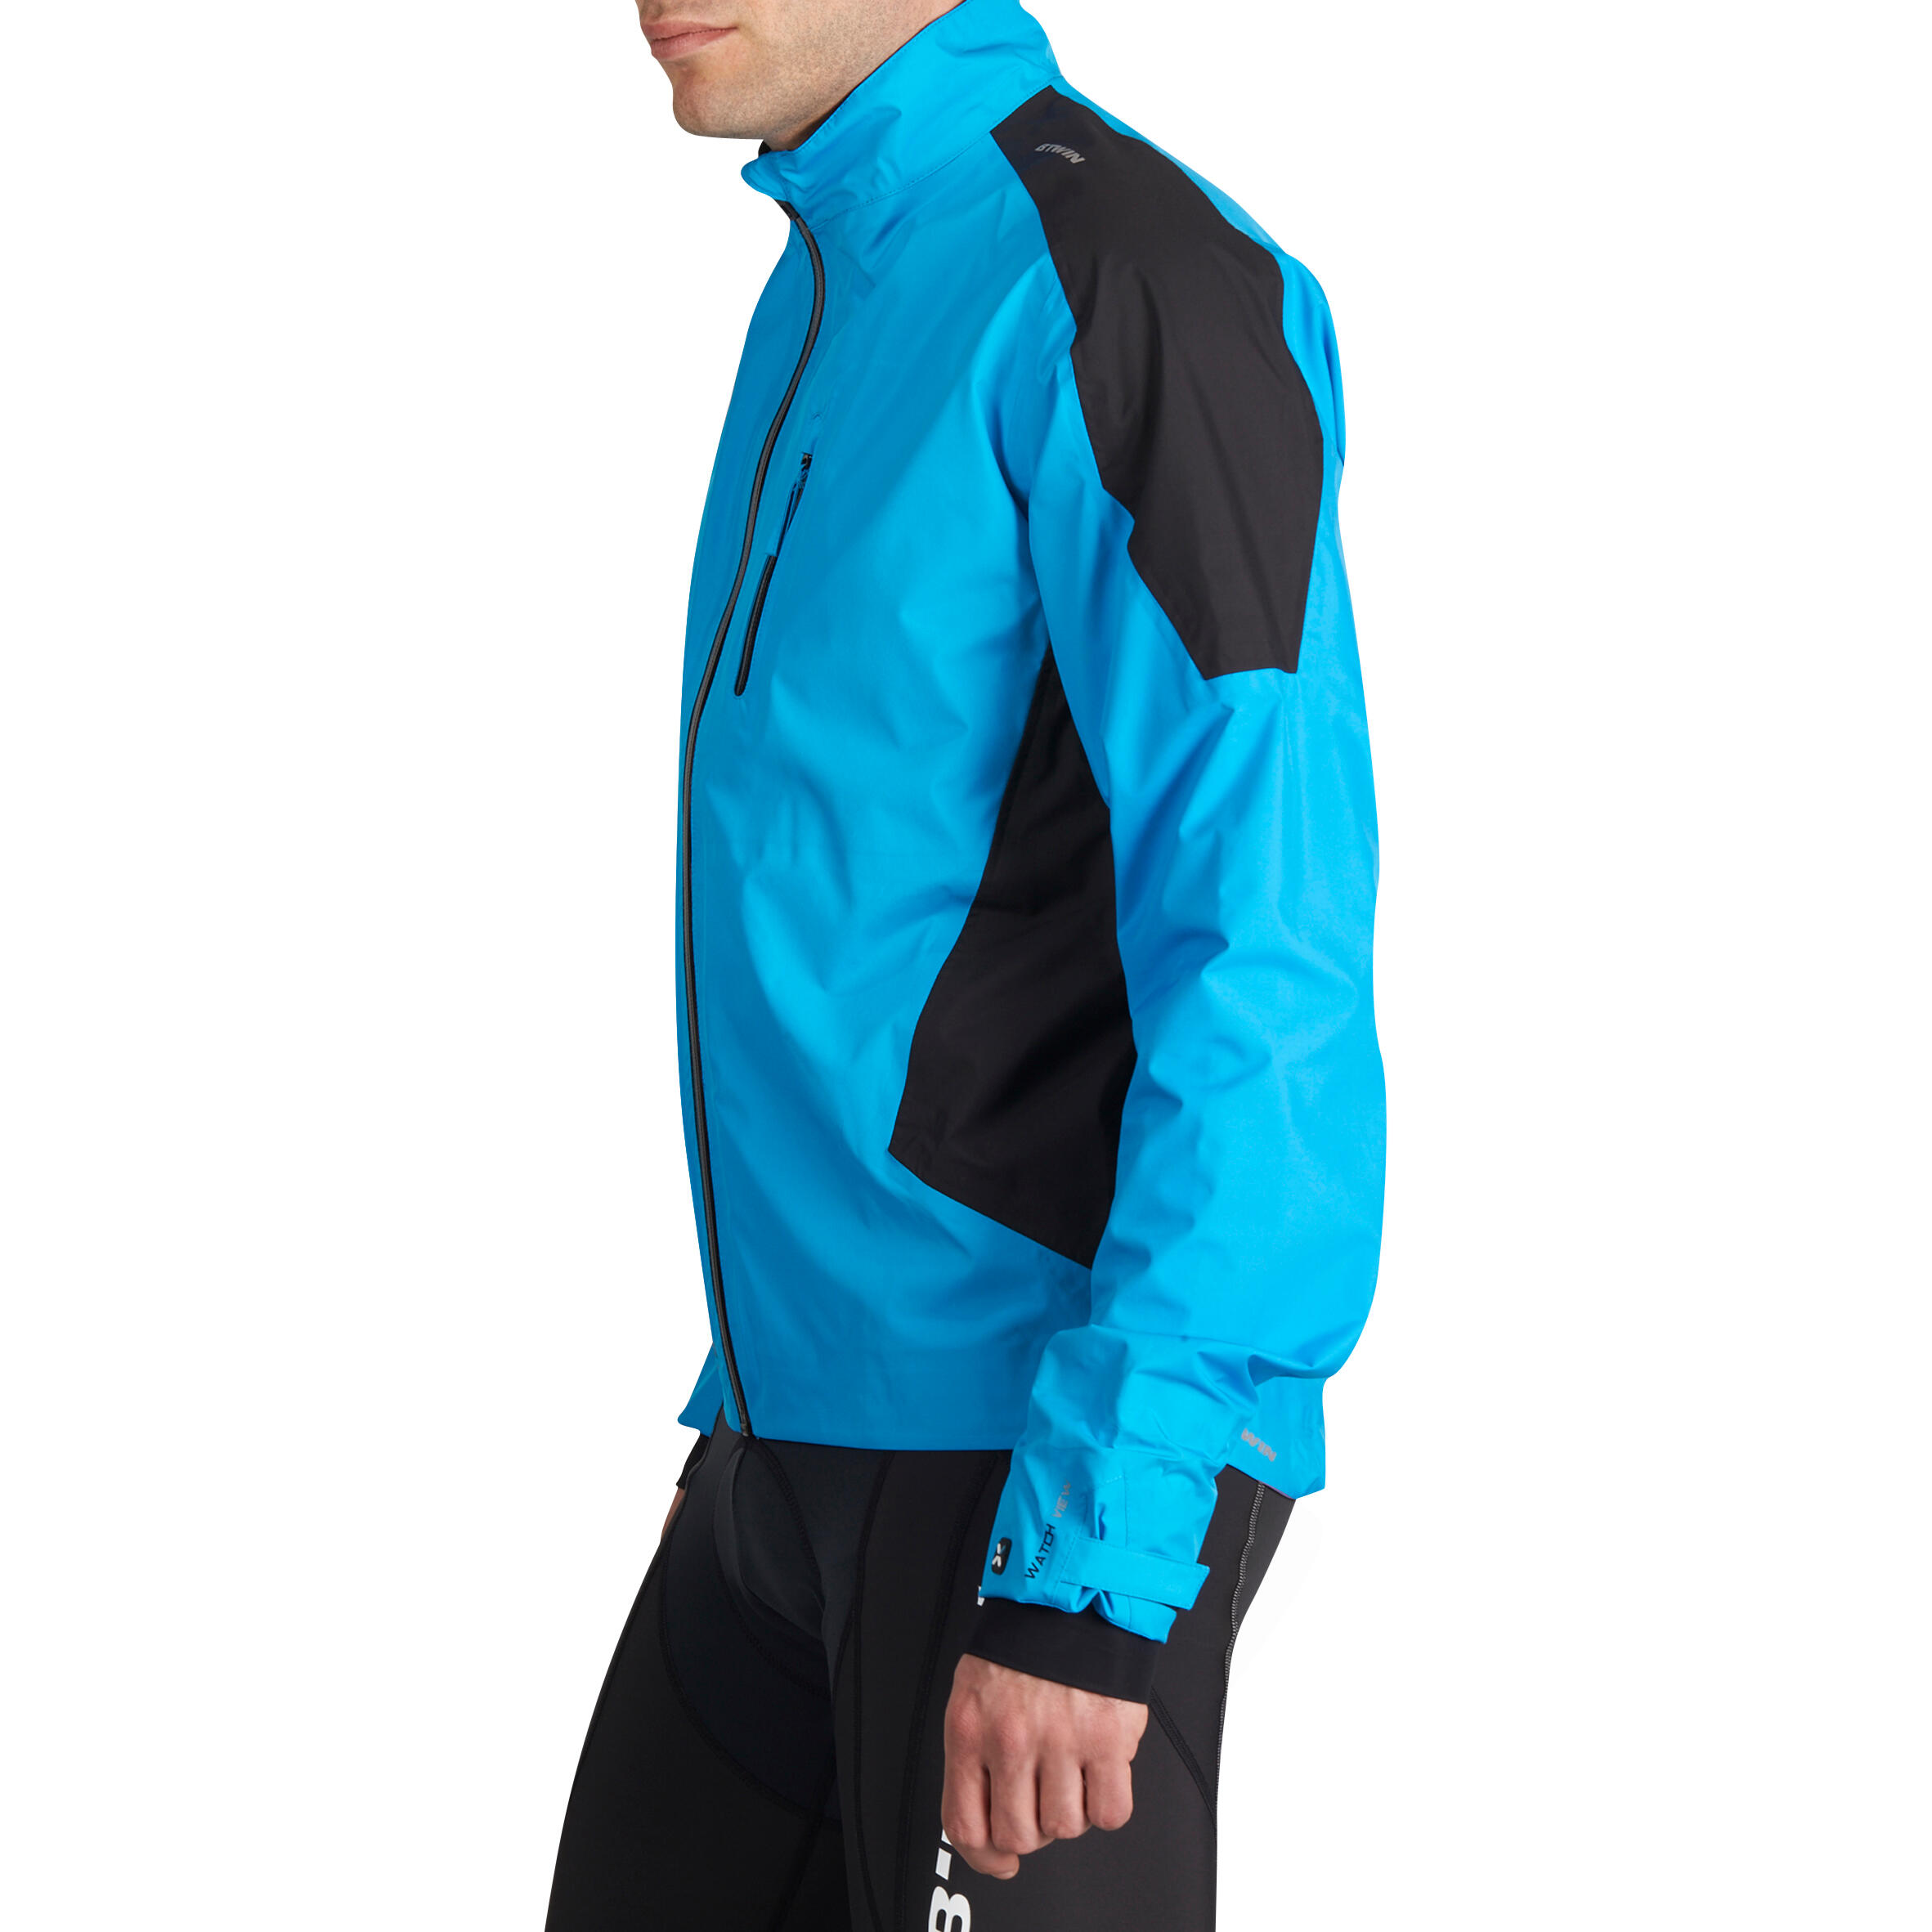 900 Mountain Biking Rainproof Jacket - Blue/Black 5/29